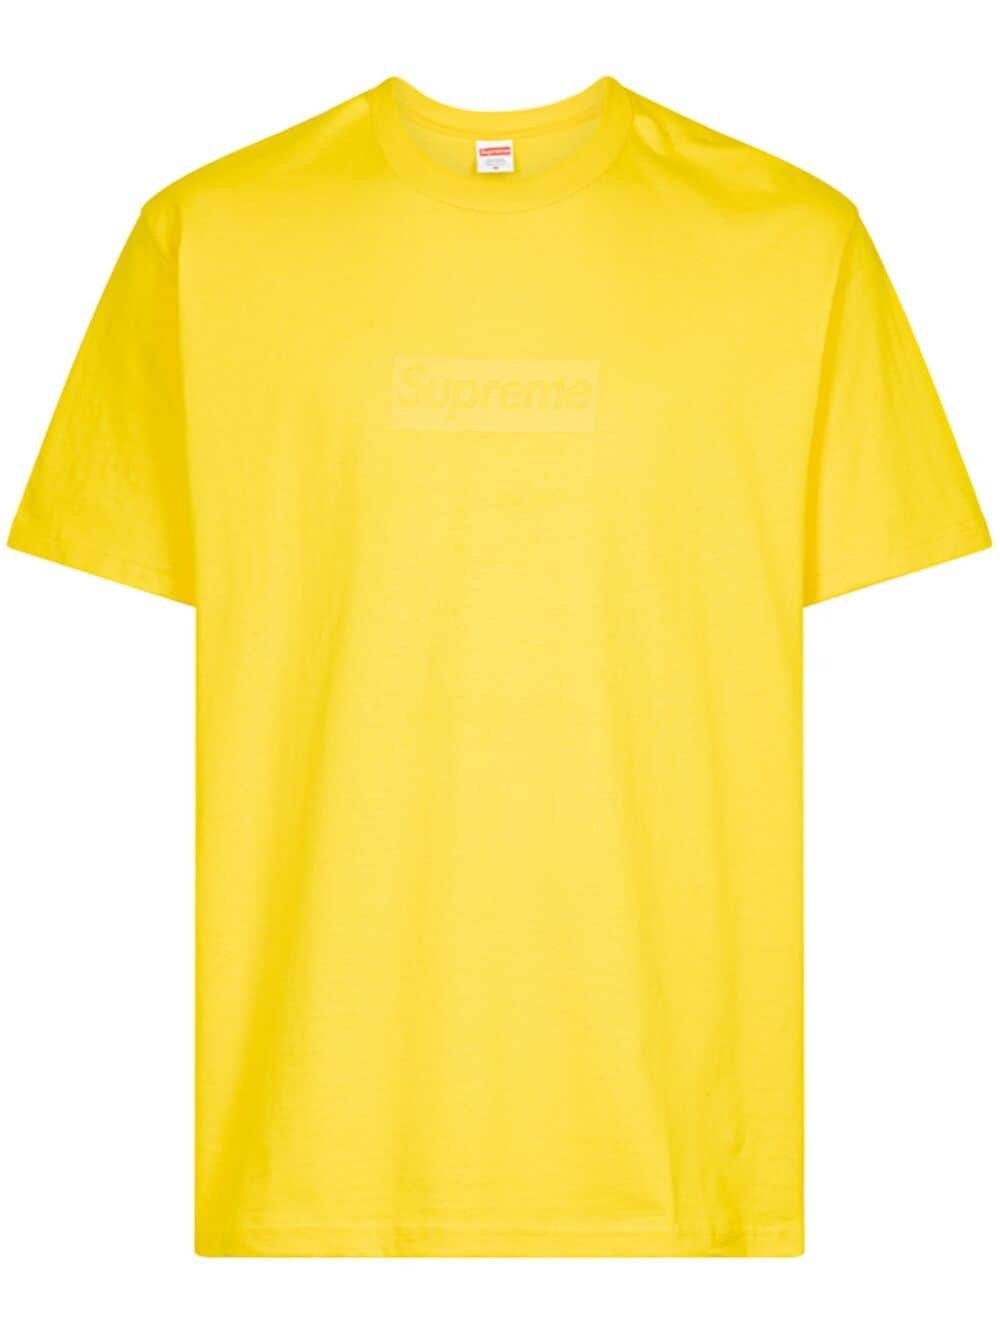 Supreme tonal box logo T-shirt